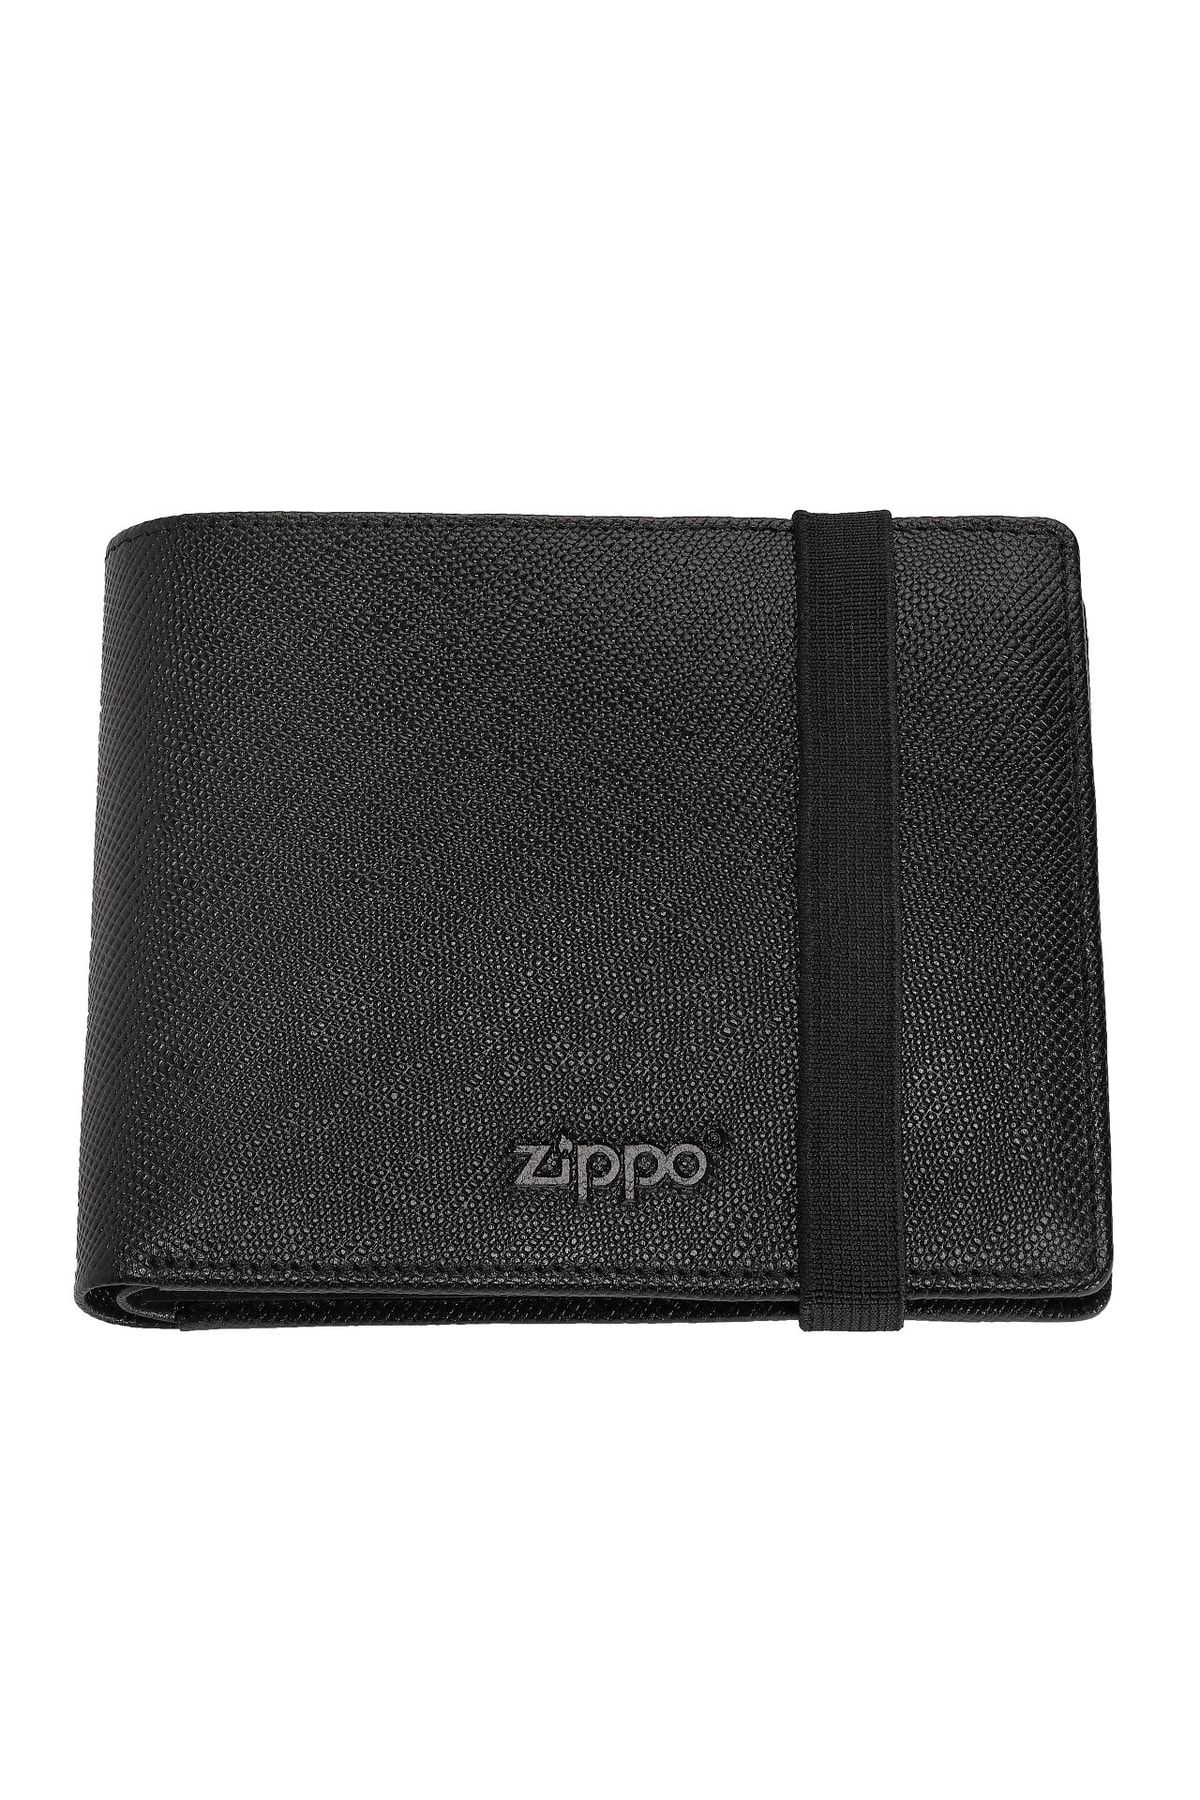 Zippo Cüzdan Saffiano Top-fold-wallet 2007076